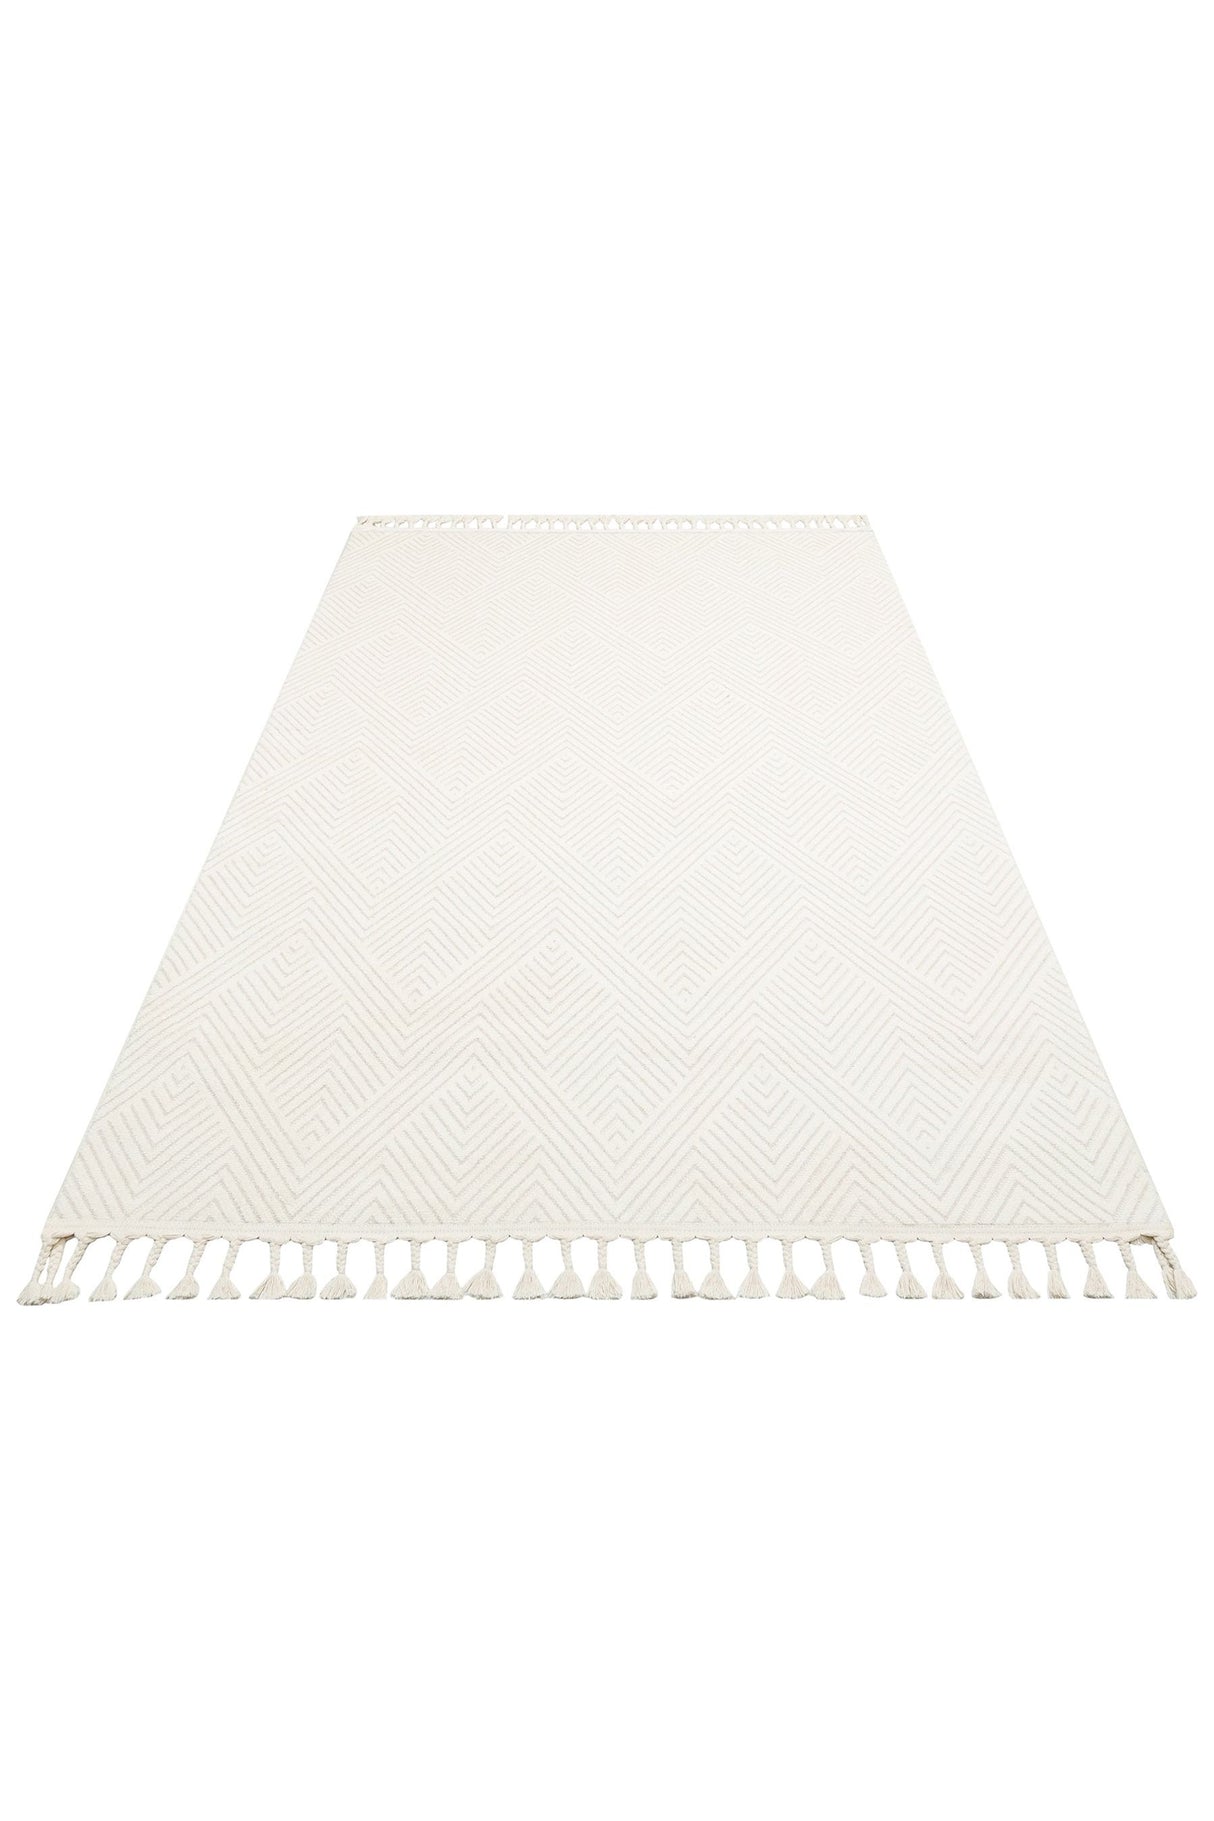 #Turkish_Carpets_Rugs# #Modern_Carpets# #Abrash_Carpets#Urb 01 White